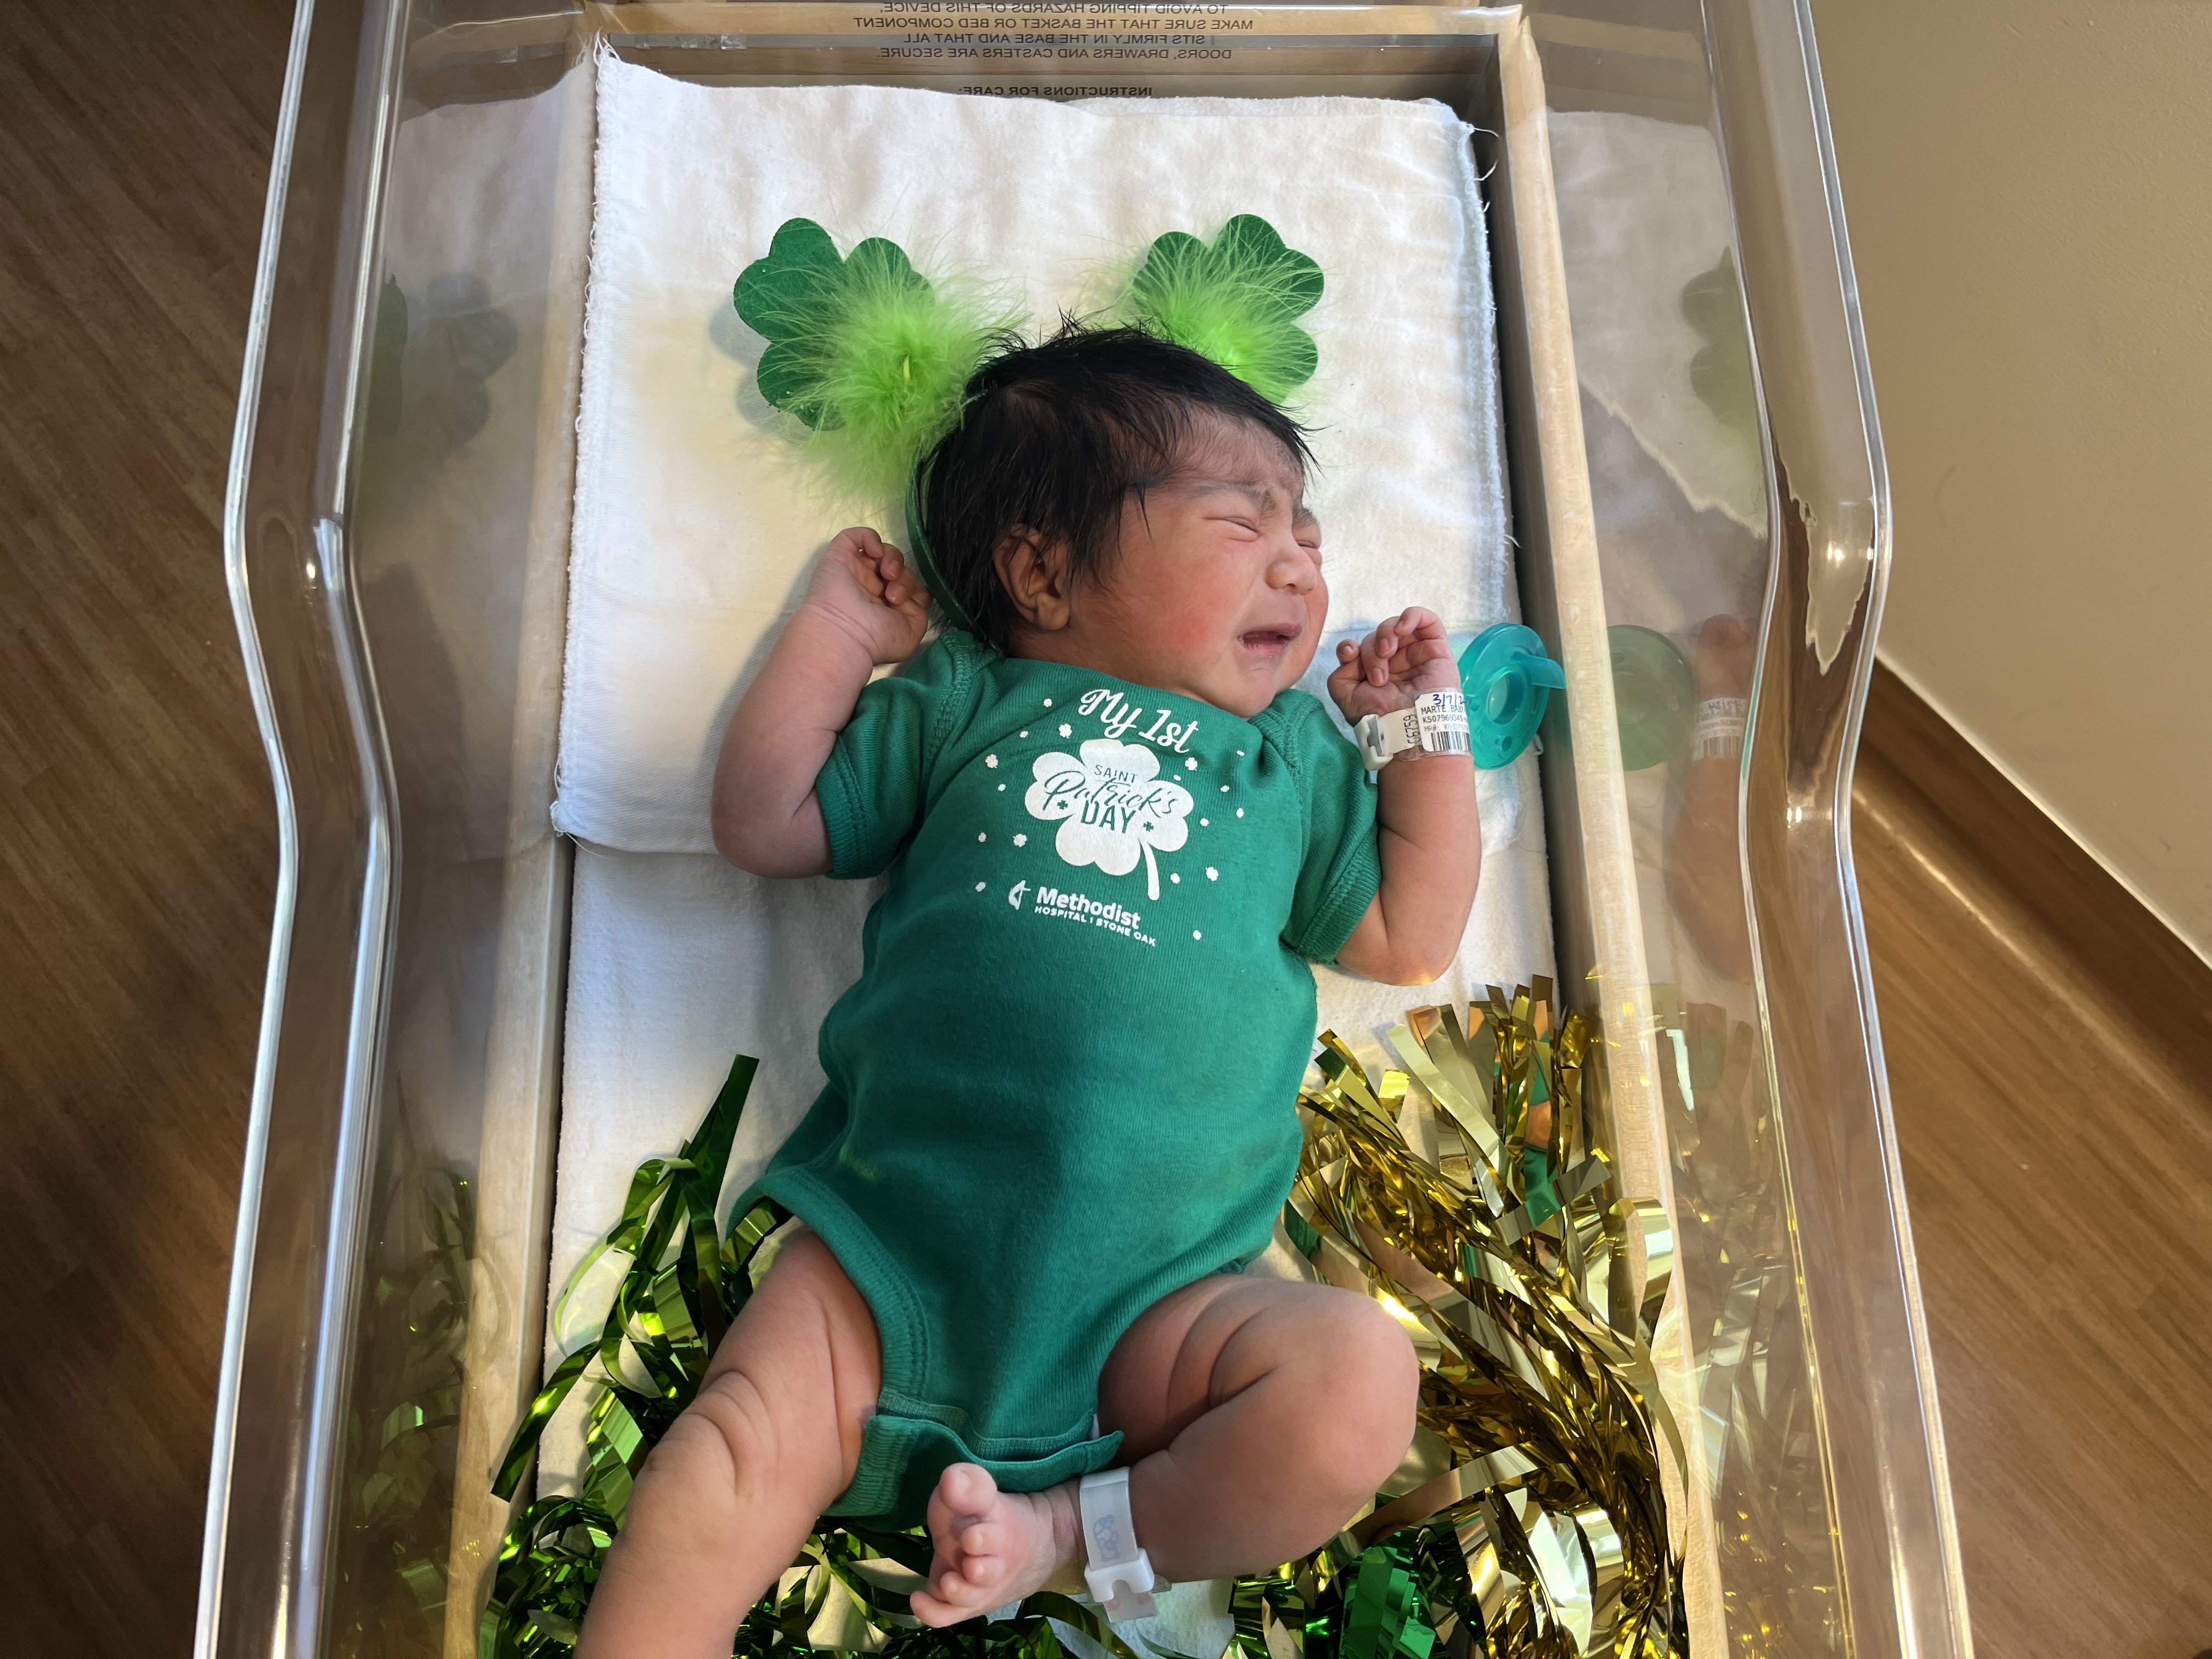 A baby in a green onesie lying in a hospital crib.